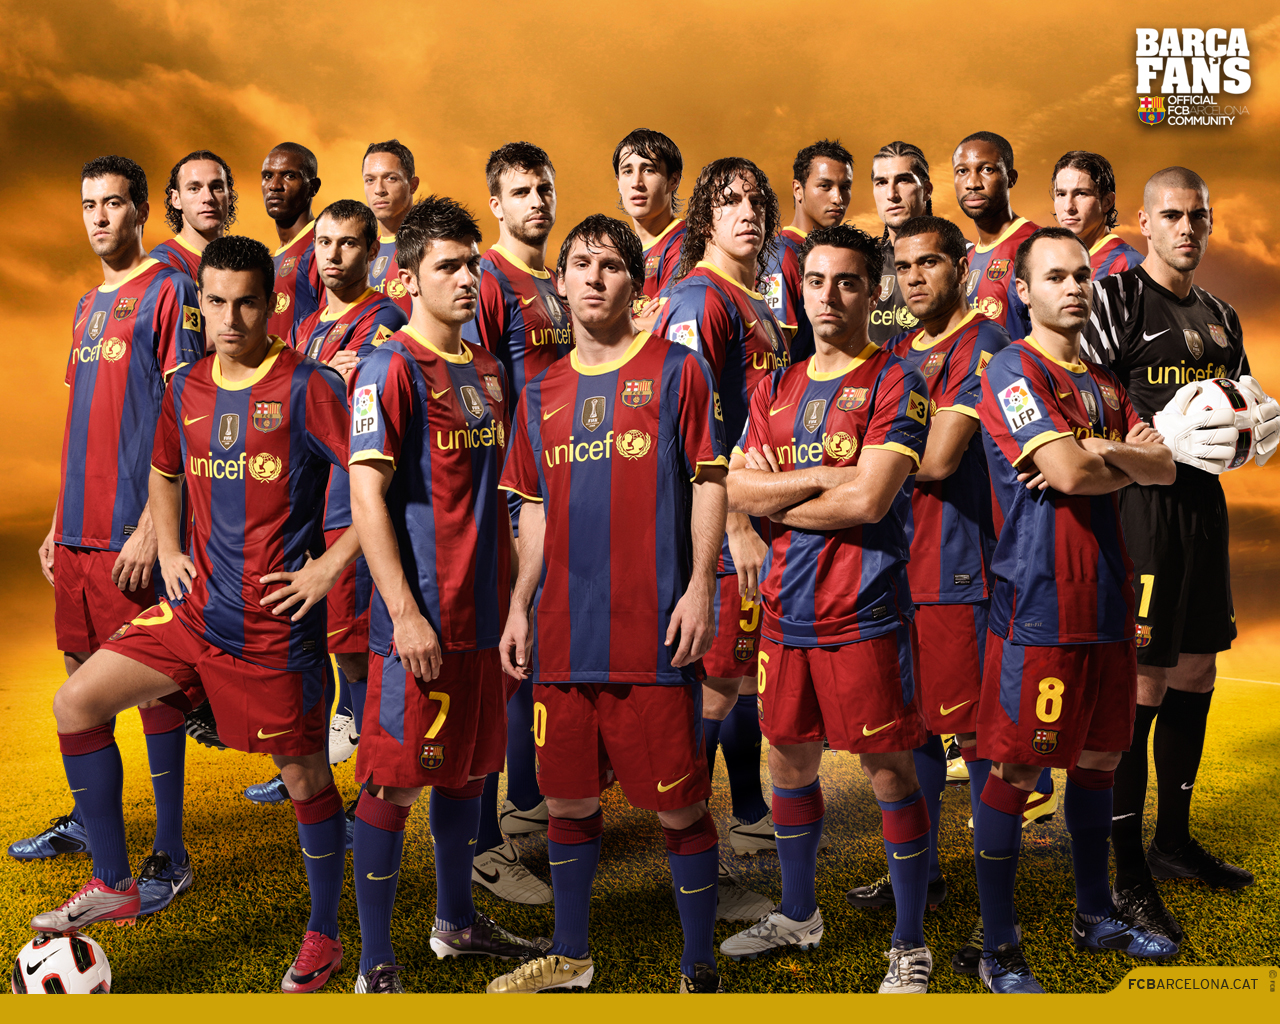 https://blogger.googleusercontent.com/img/b/R29vZ2xl/AVvXsEiMz45i2FXejPw5YSAblvZUMCRVRYcdxOTS8g3jr2wW1M2nfz0aRgVmySSwf4lNB0GDrUK8KRw7p3oPeva2mBrKfO8VWWoHJ31168TzfqbDz7q0qojHcD6pOsbX9YvSjcrR48s26Idz8hE/s1600/FC+Barcelona+Team+Cool+HD+Wallpapers+2013_4.jpg